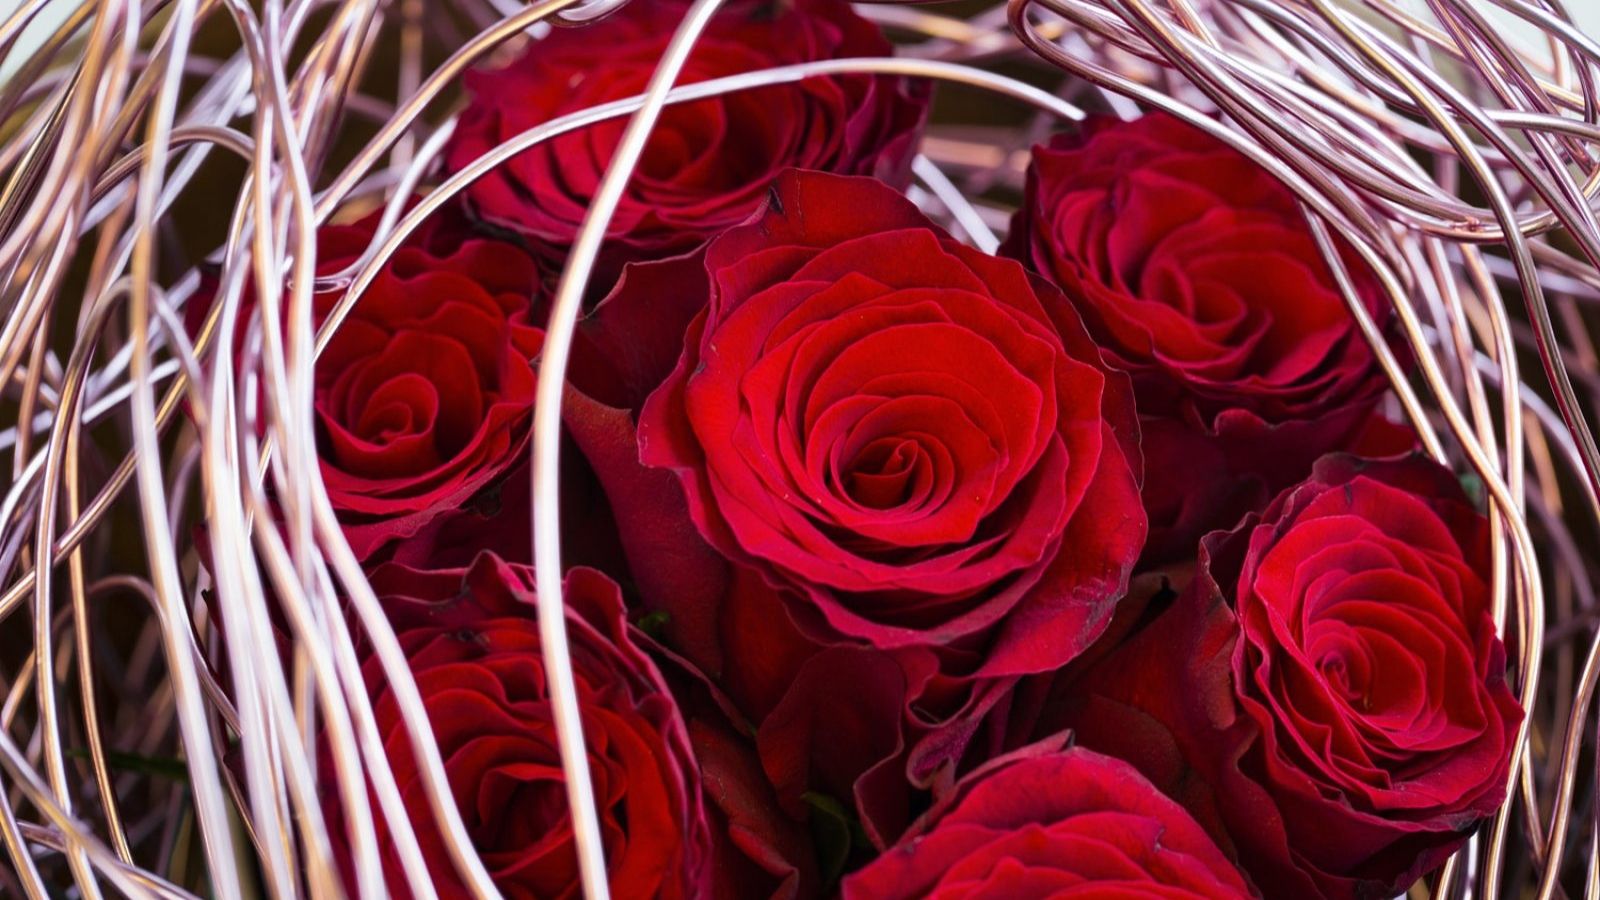 rose-rhodos-cut-flower-on-thursd-facebook